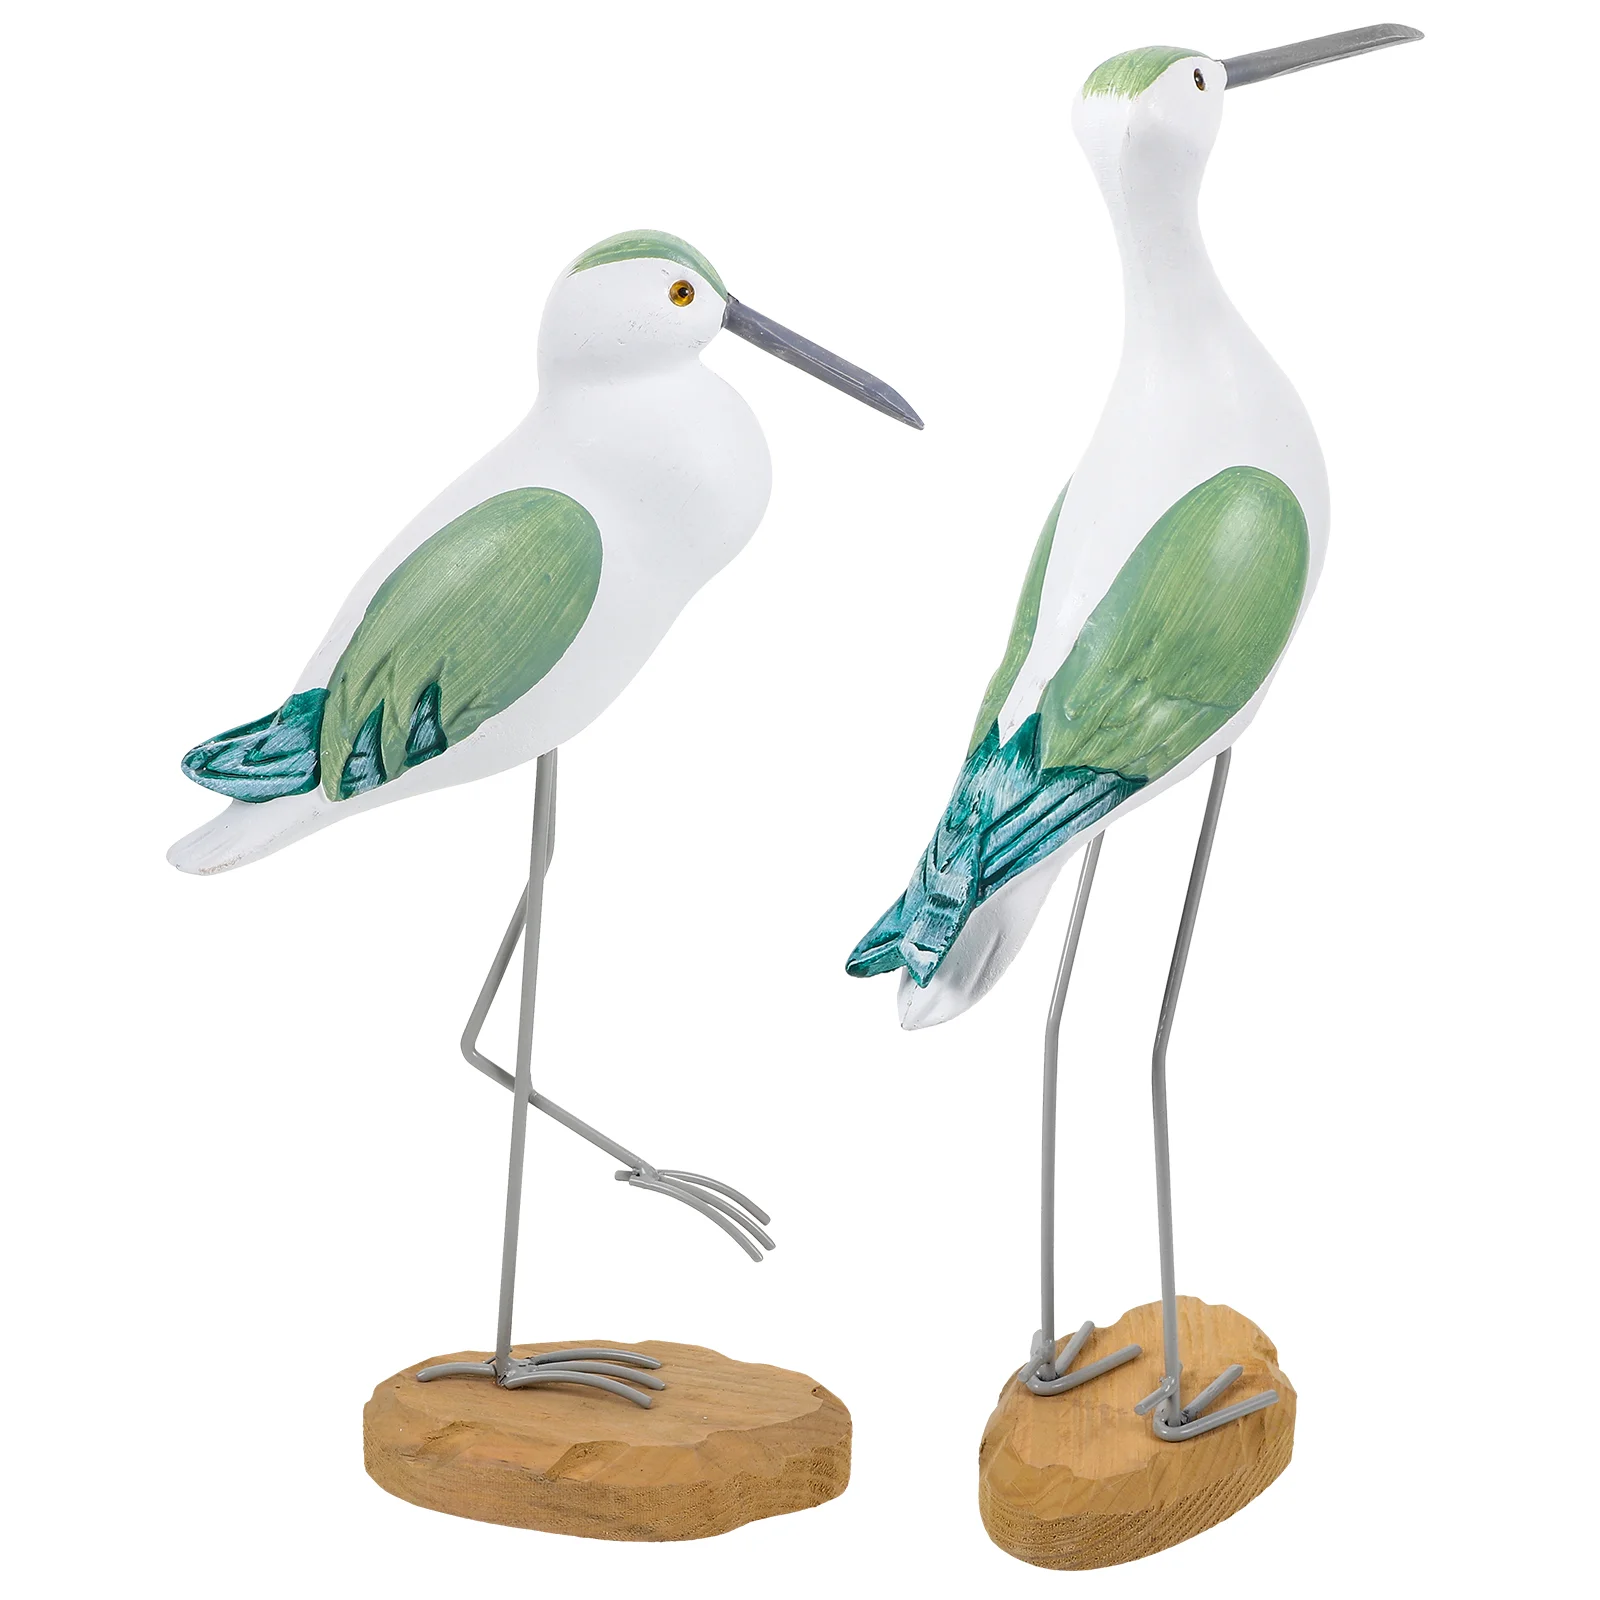 

Imikeya Seagull Ornaments Outdoor Home Decor Tv Stand Desktop Coastal Beach Bird Statue Seaside Ocean Wooden Craft